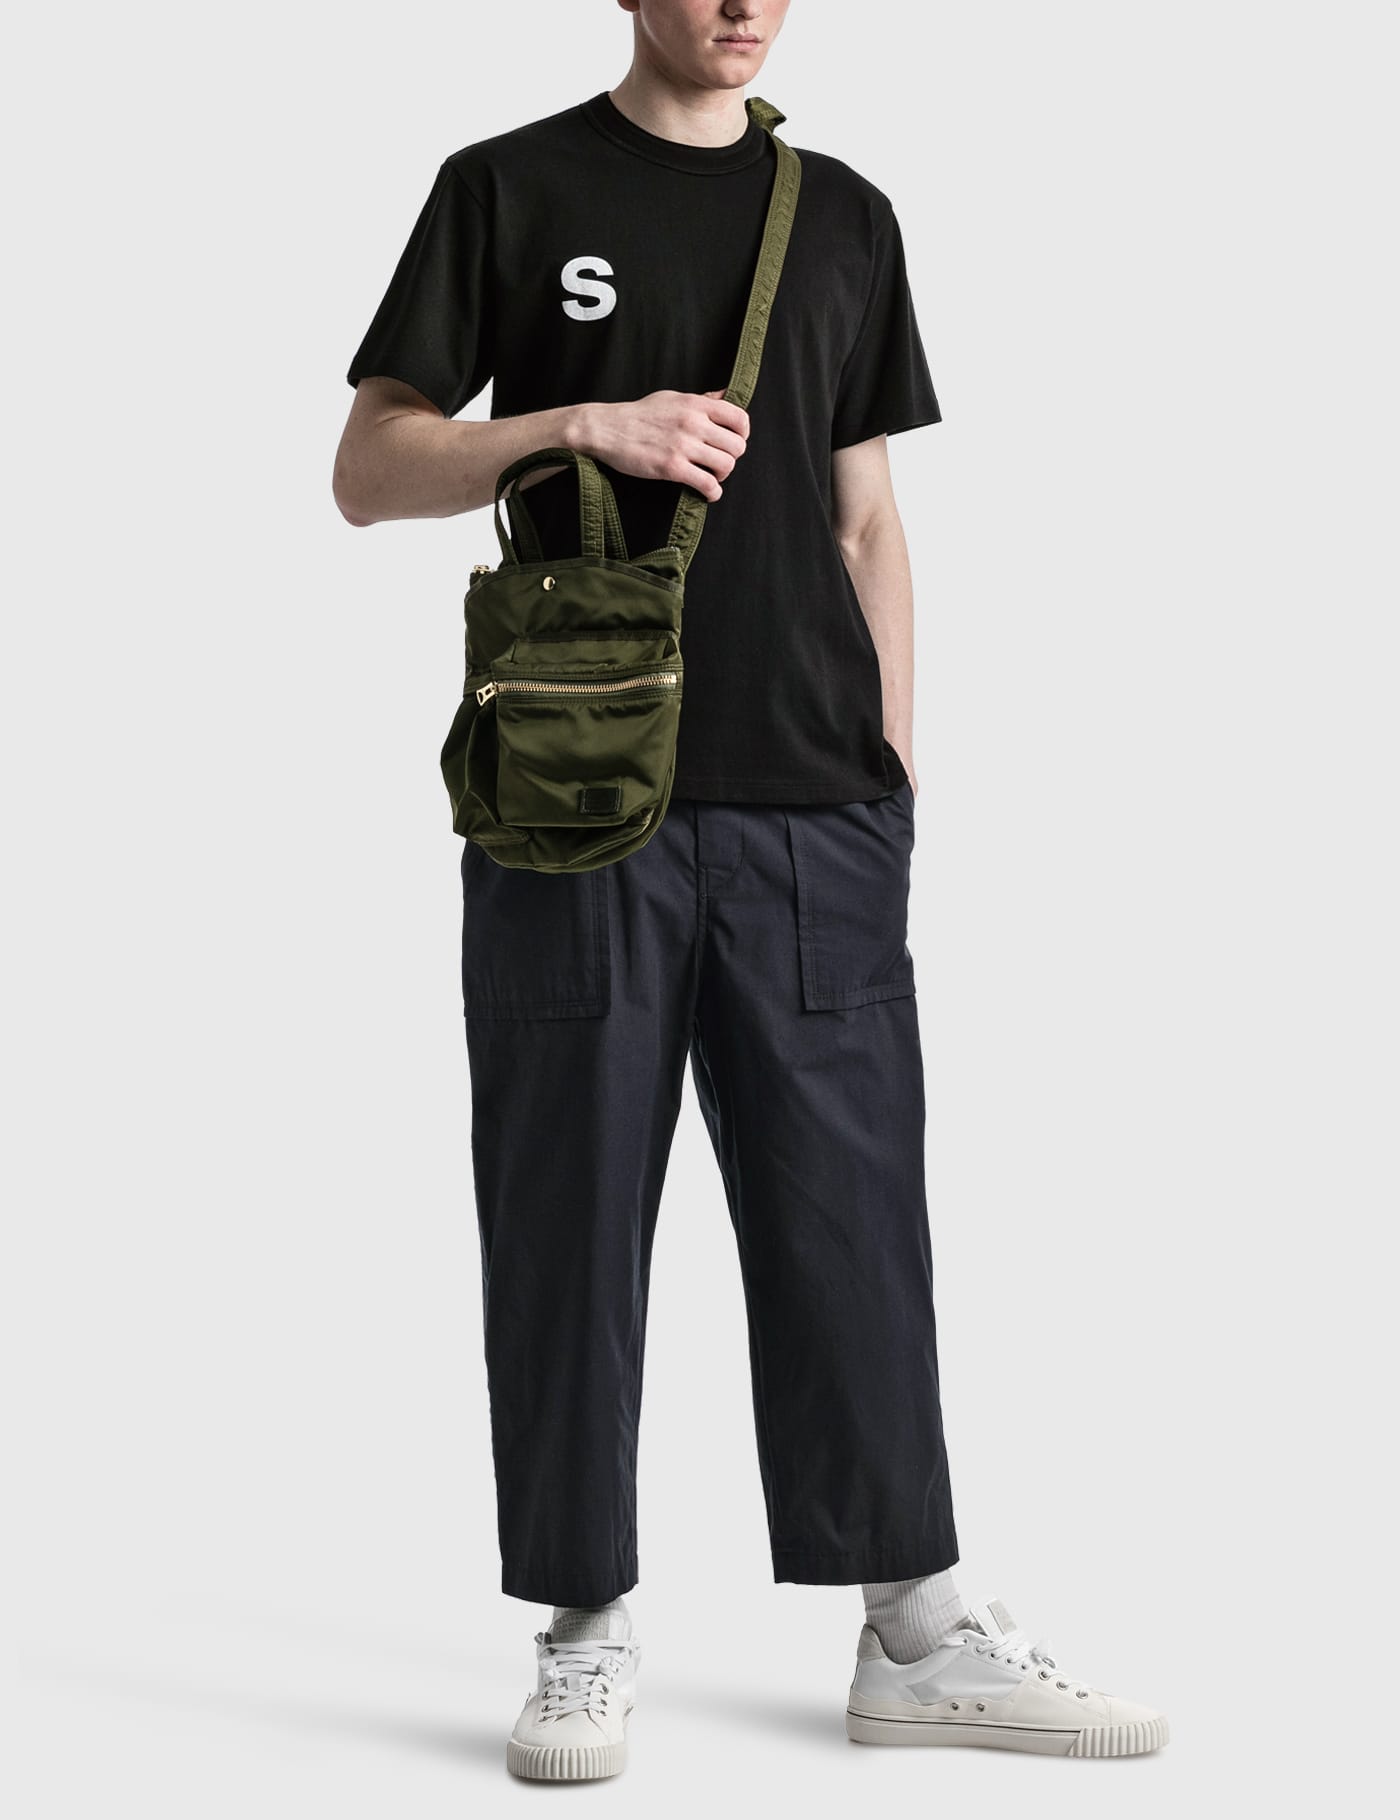 Sacai - Sacai x Porter Pocket Bag | HBX - Globally Curated Fashion 